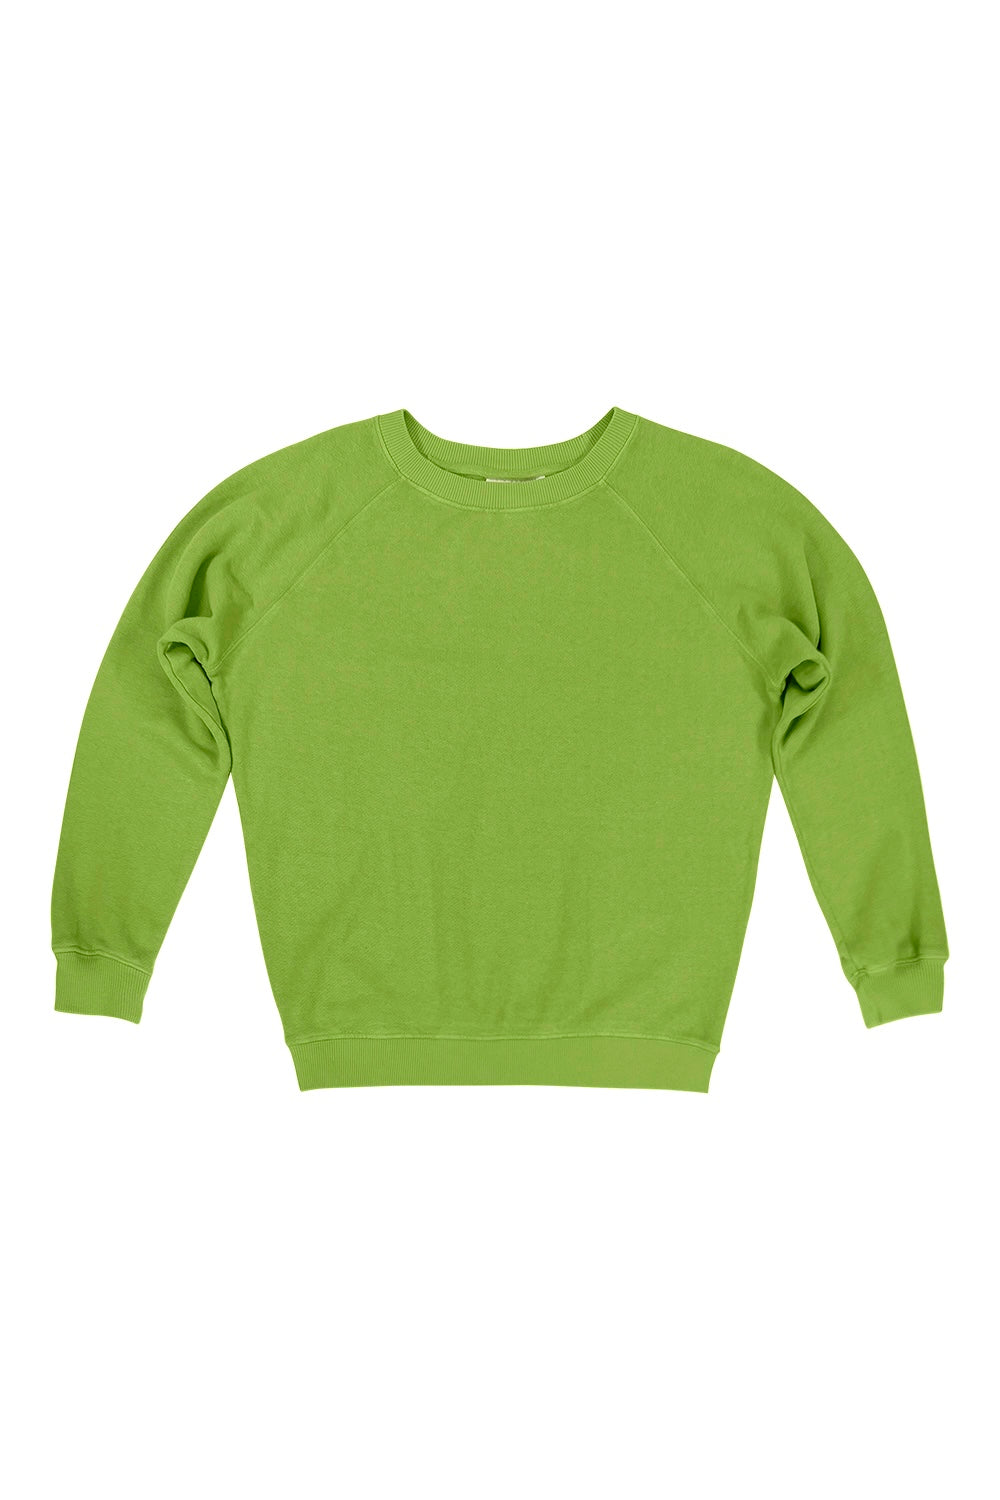 Bonfire Raglan Sweatshirt | Jungmaven Hemp Clothing & Accessories / Color: Dark Matcha